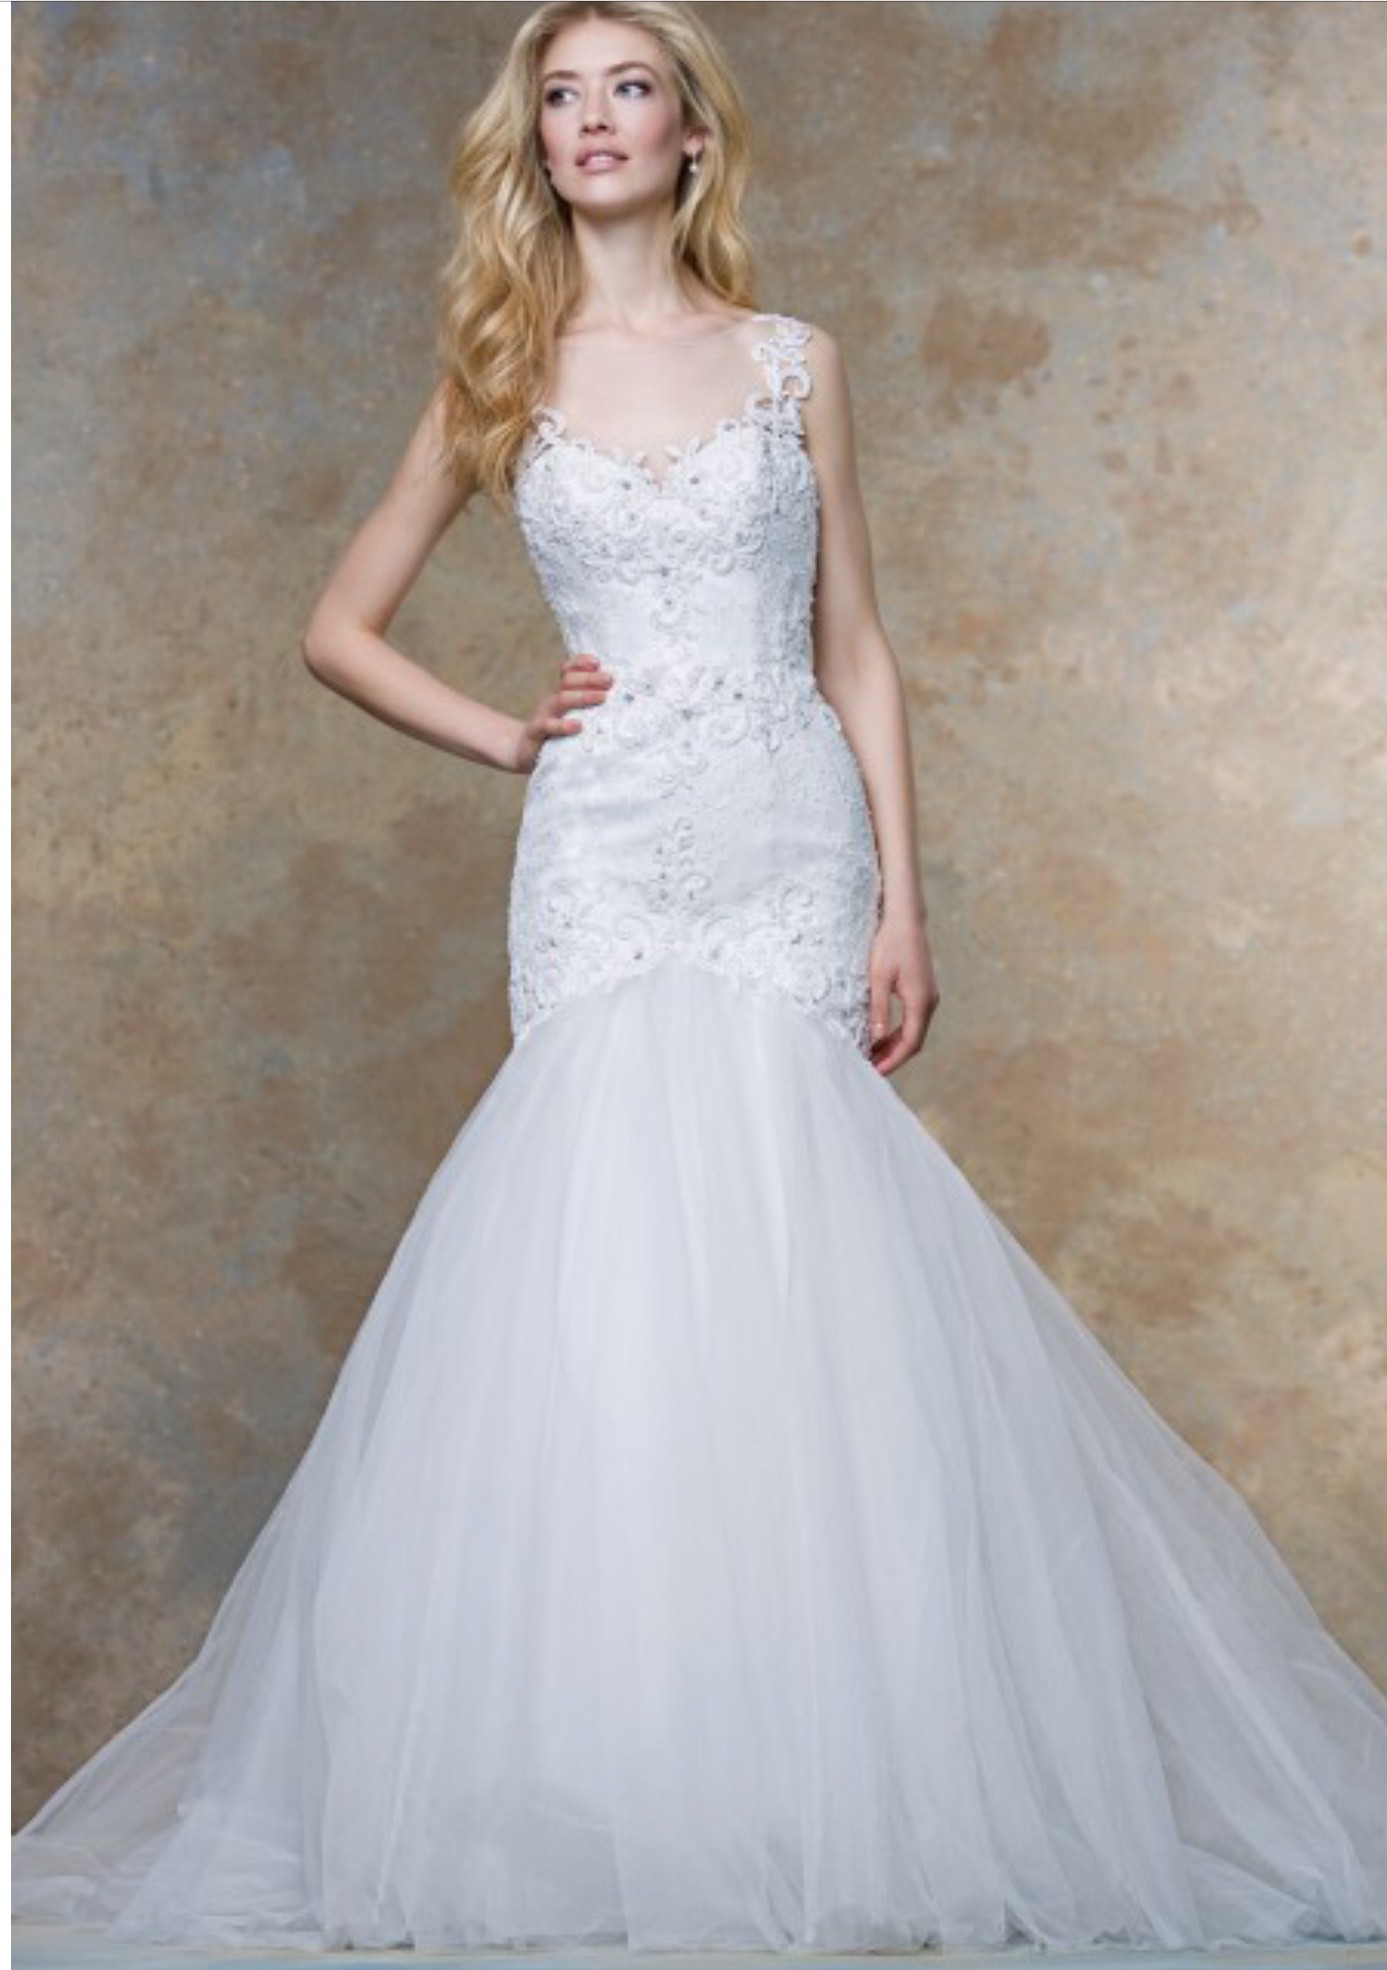 Ellis Bridal Sample Wedding Dress Save 62% - Stillwhite